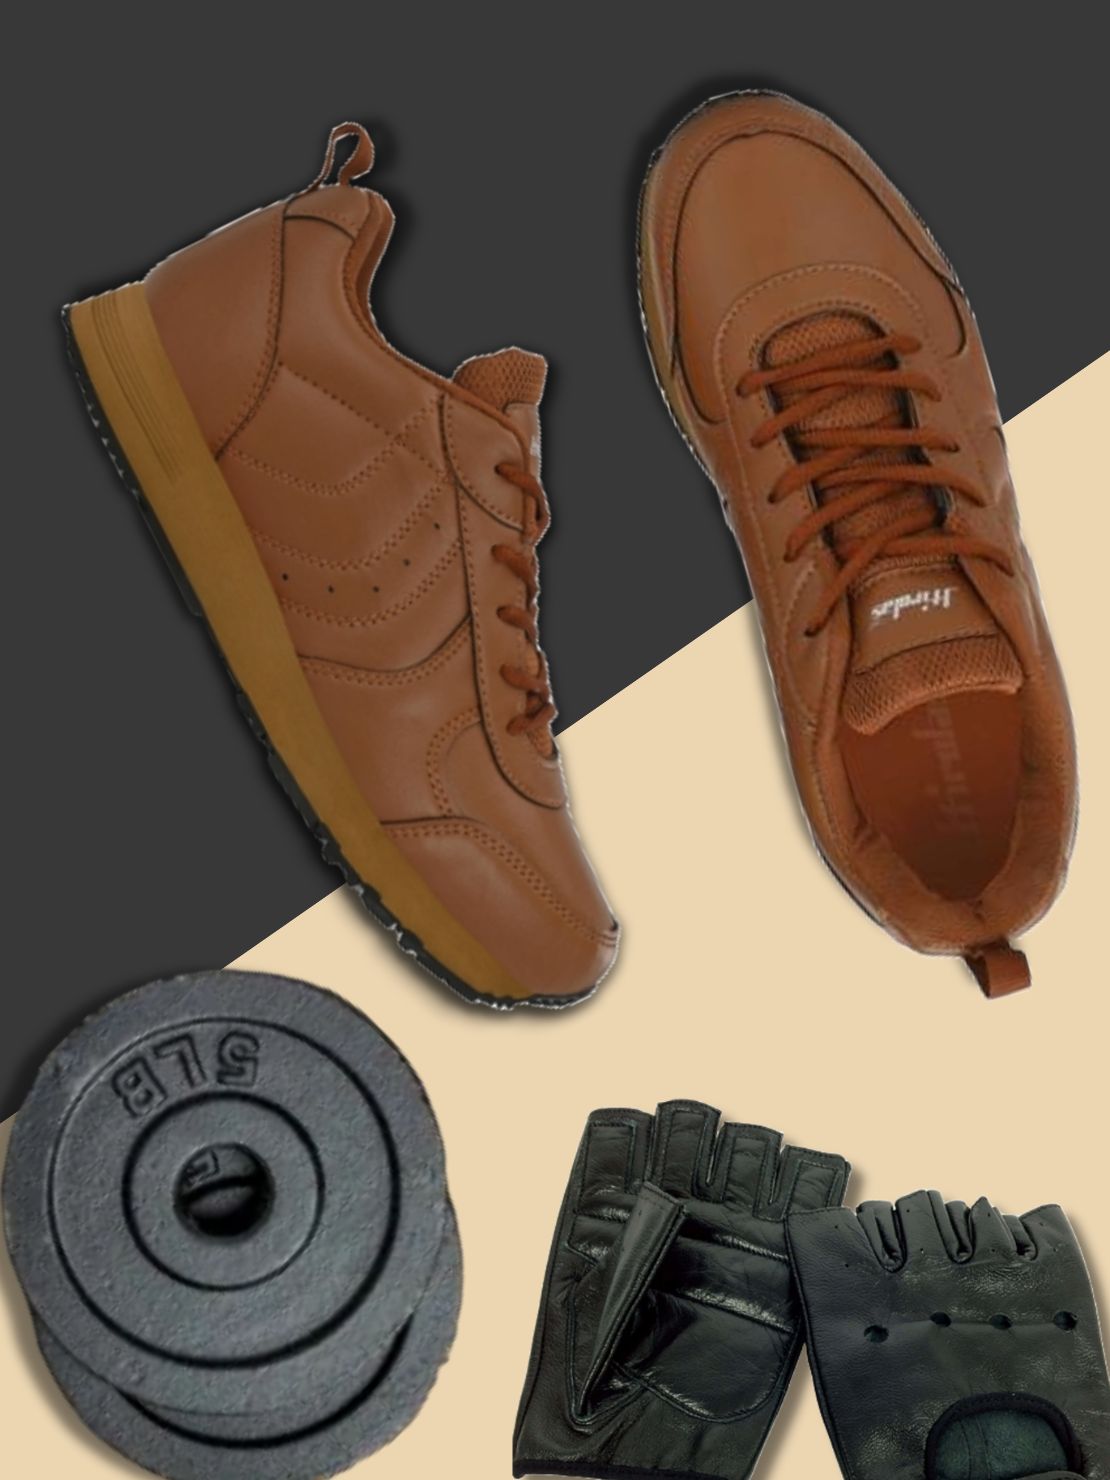 Hirolas® Men's  Multi Sport Shock Absorbing Walking  Running Fitness Athletic Training Gym Fashion Sneaker Shoes - Tan HRL2102TAN